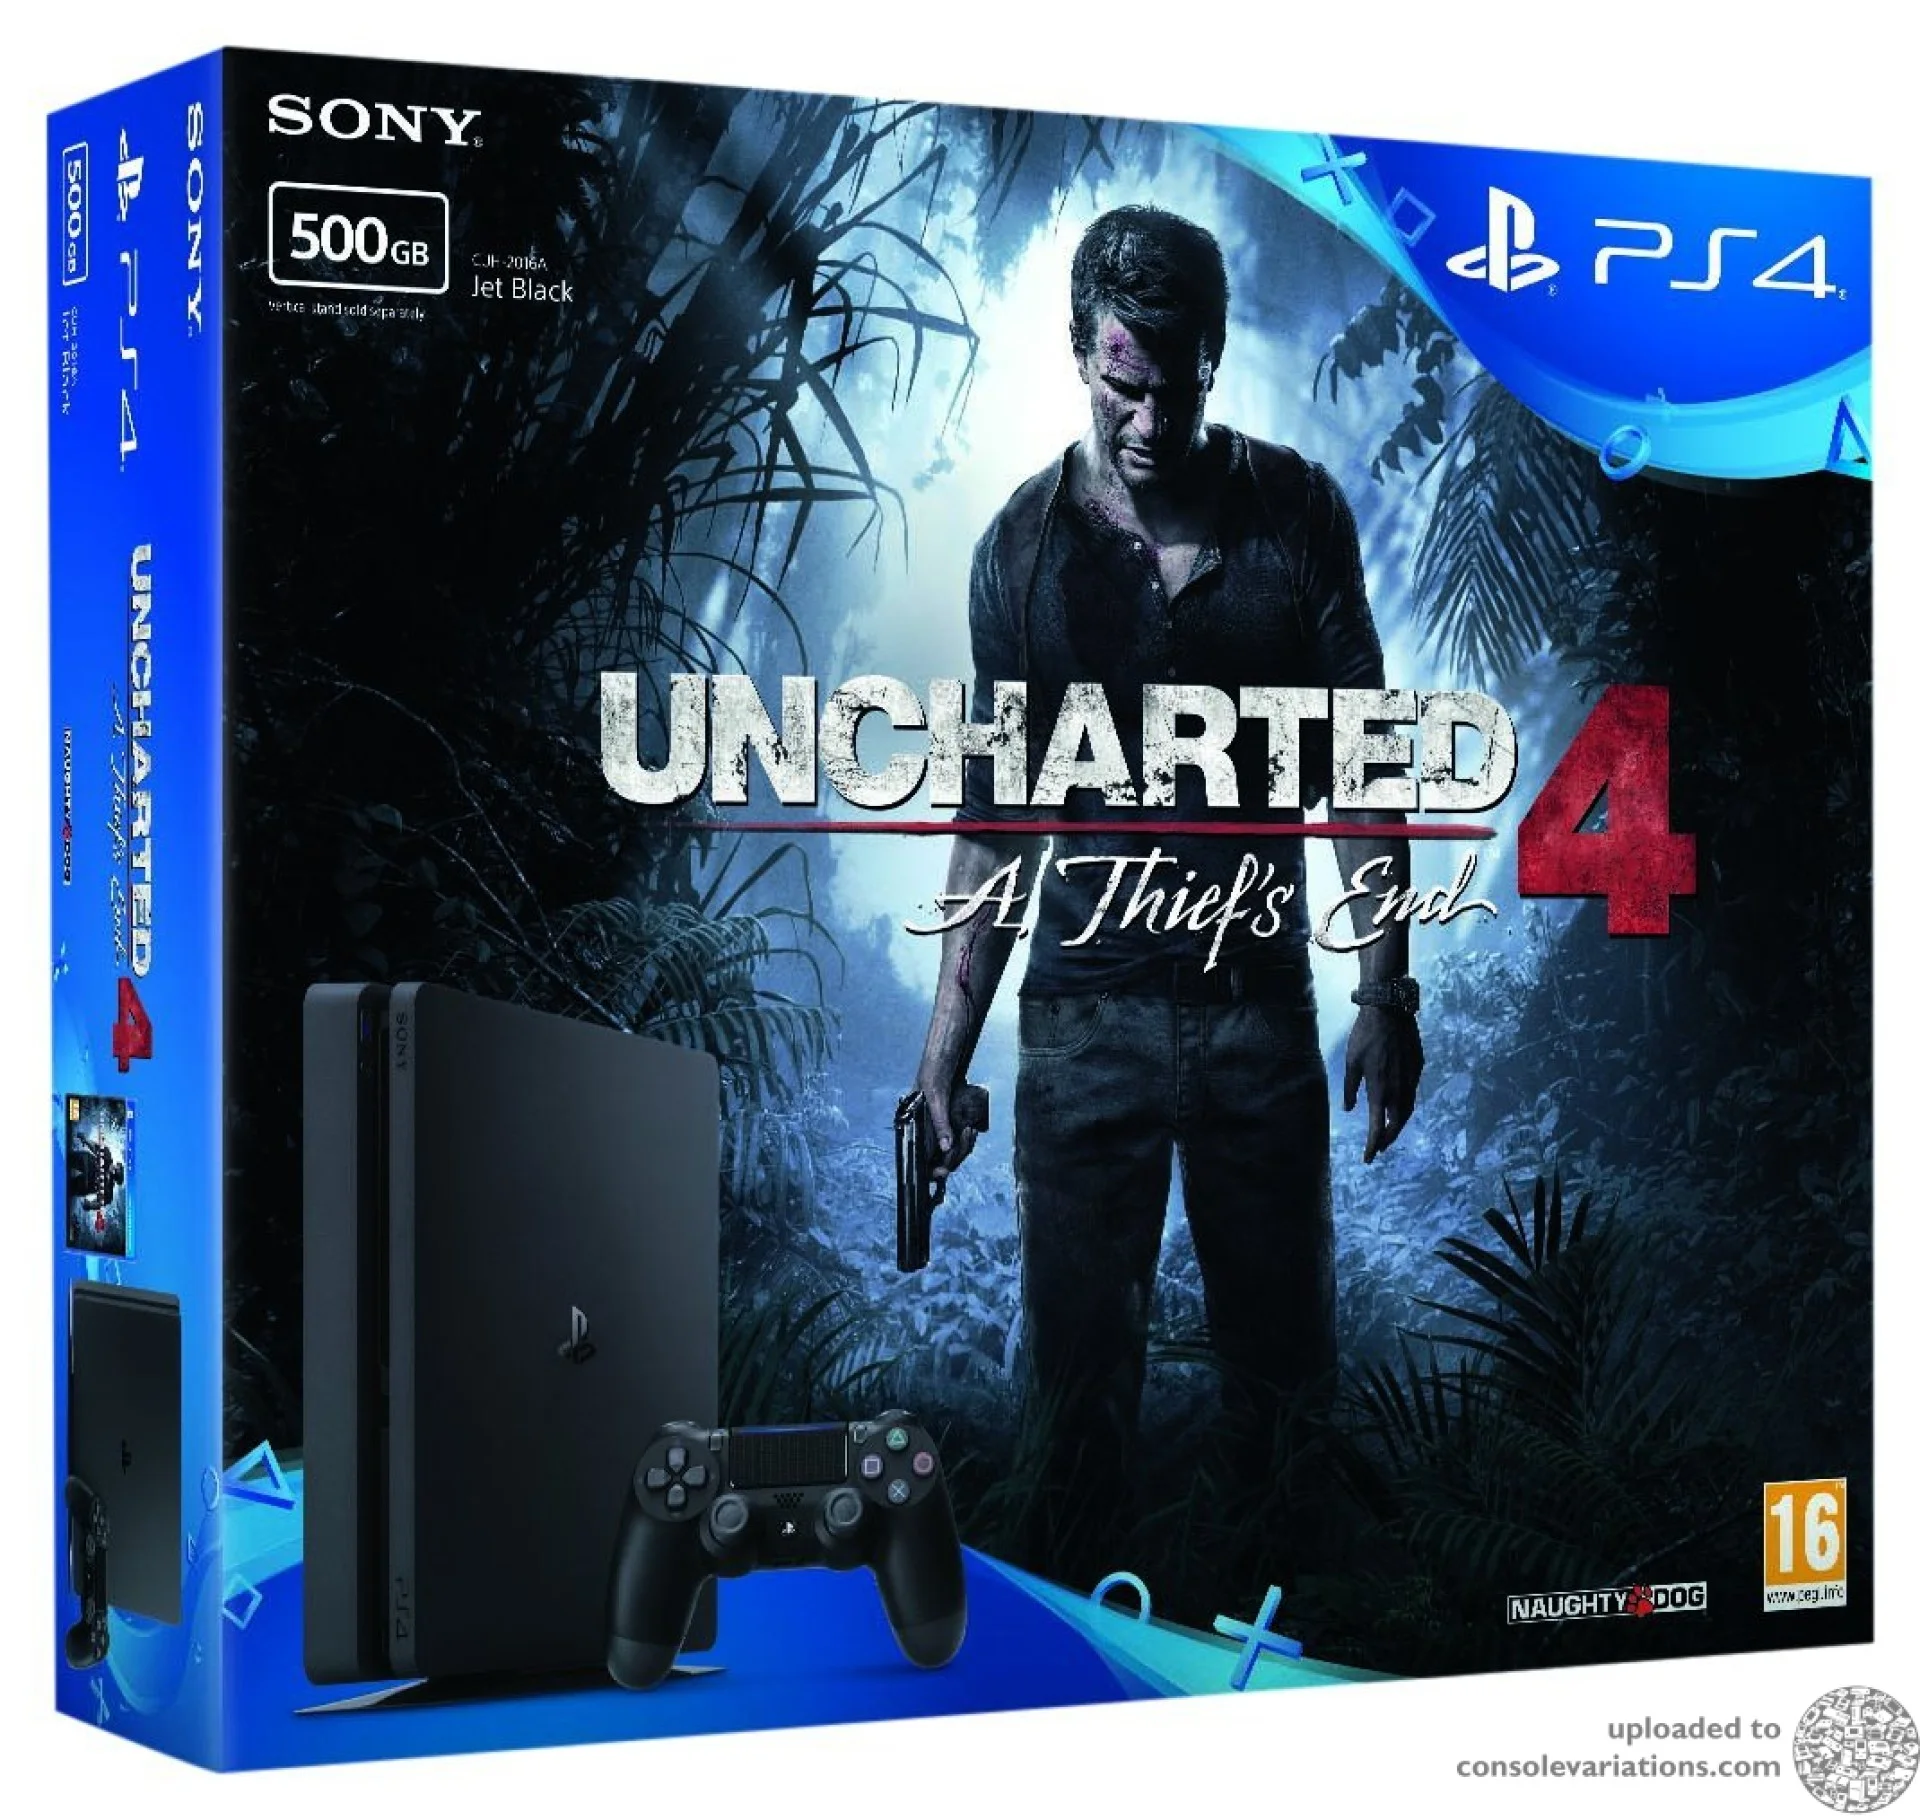  Sony PlayStation 4 Slim Uncharted 4 Bundle